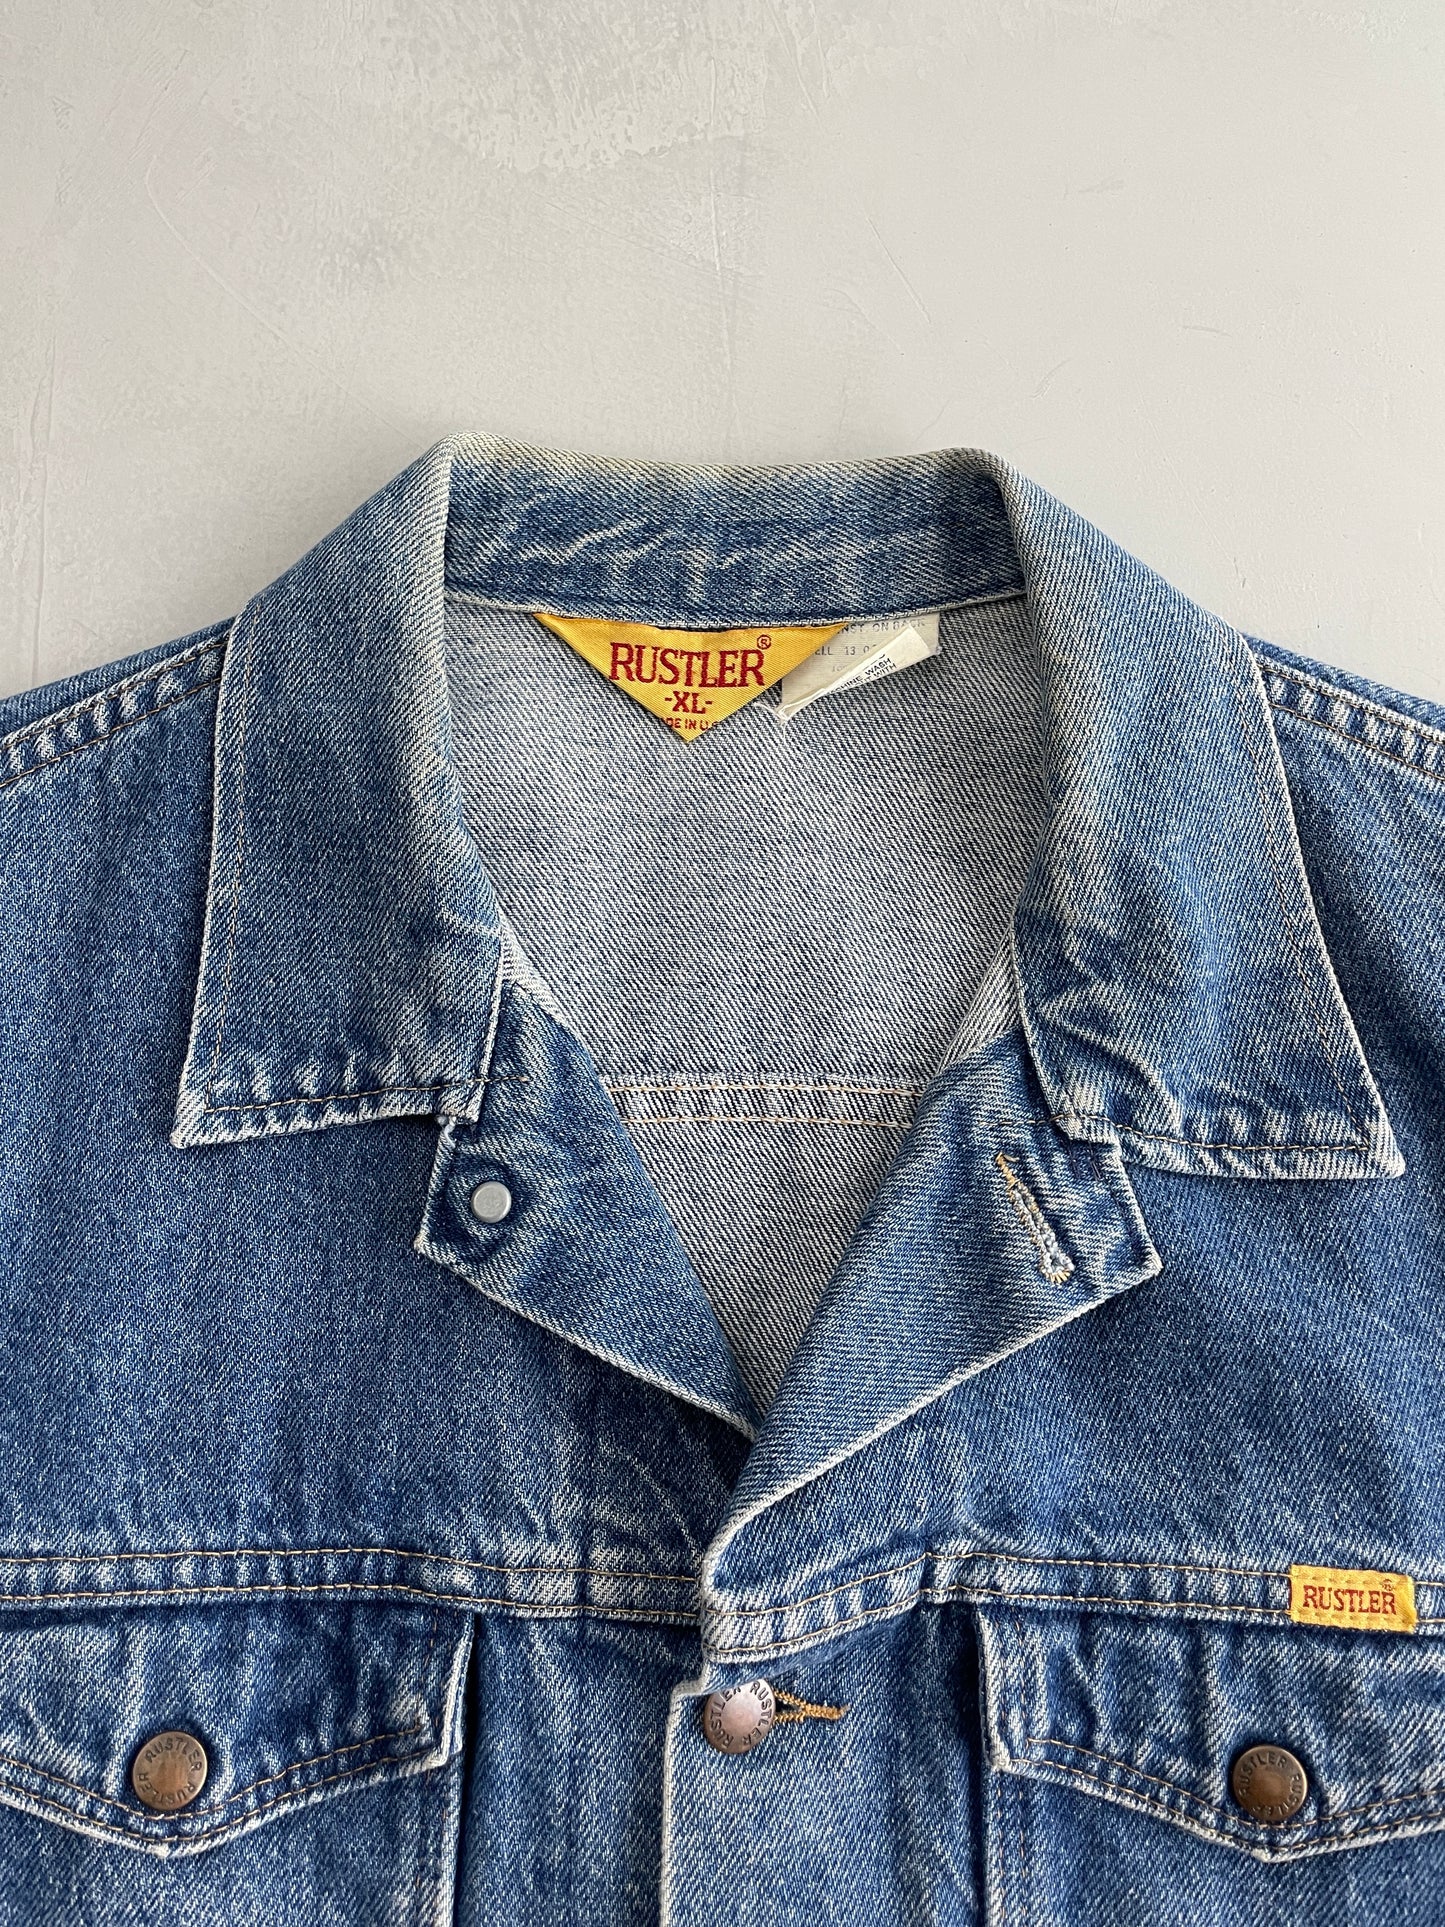 70's Rustler Denim Jacket [XL]